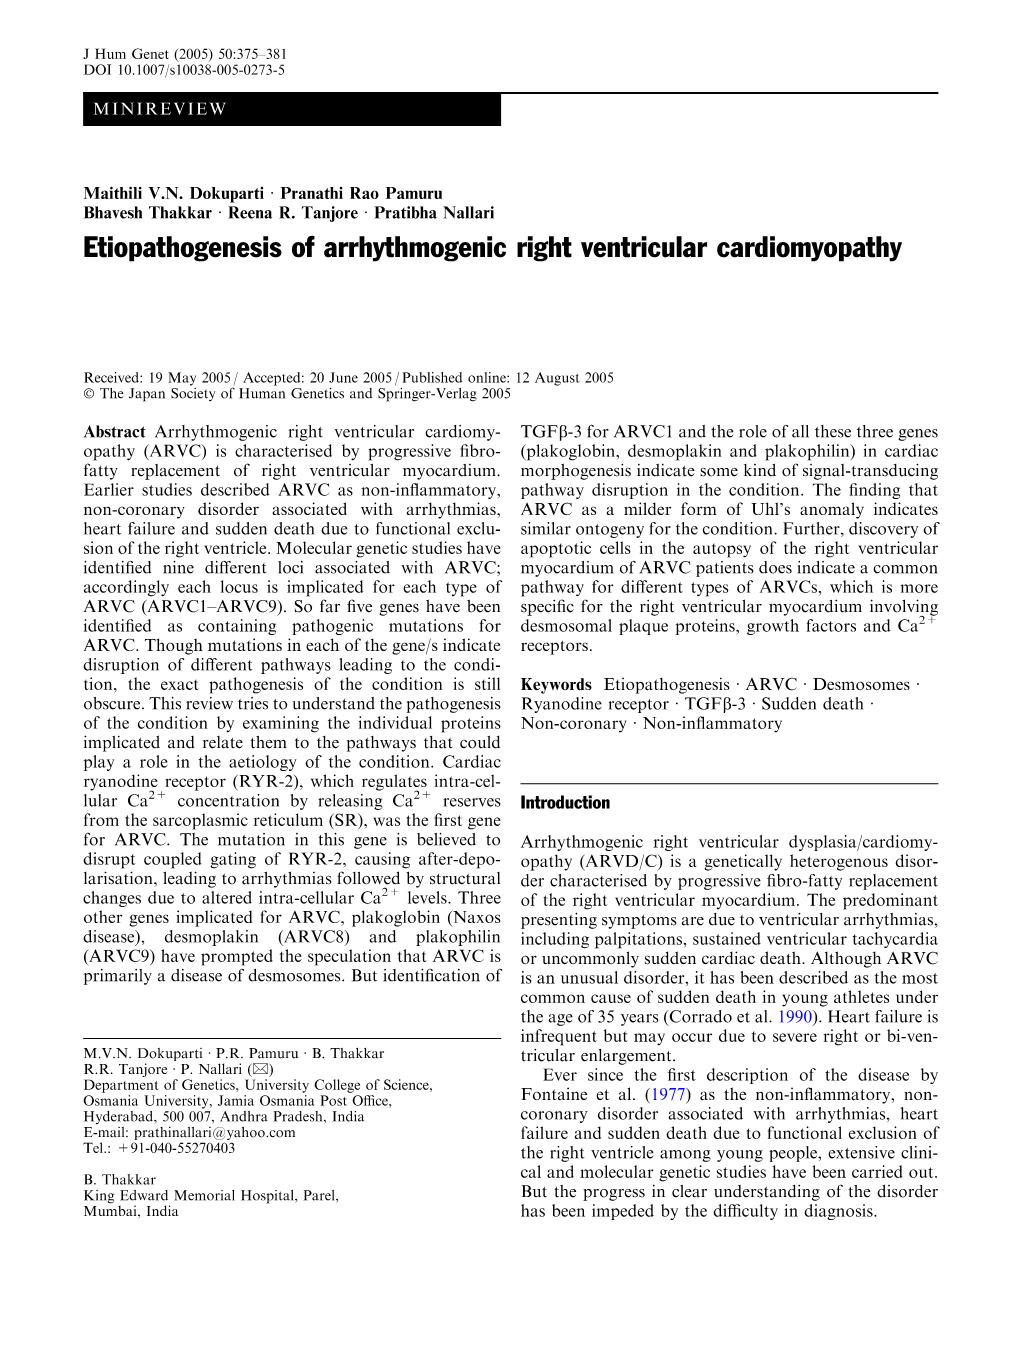 Etiopathogenesis of Arrhythmogenic Right Ventricular Cardiomyopathy